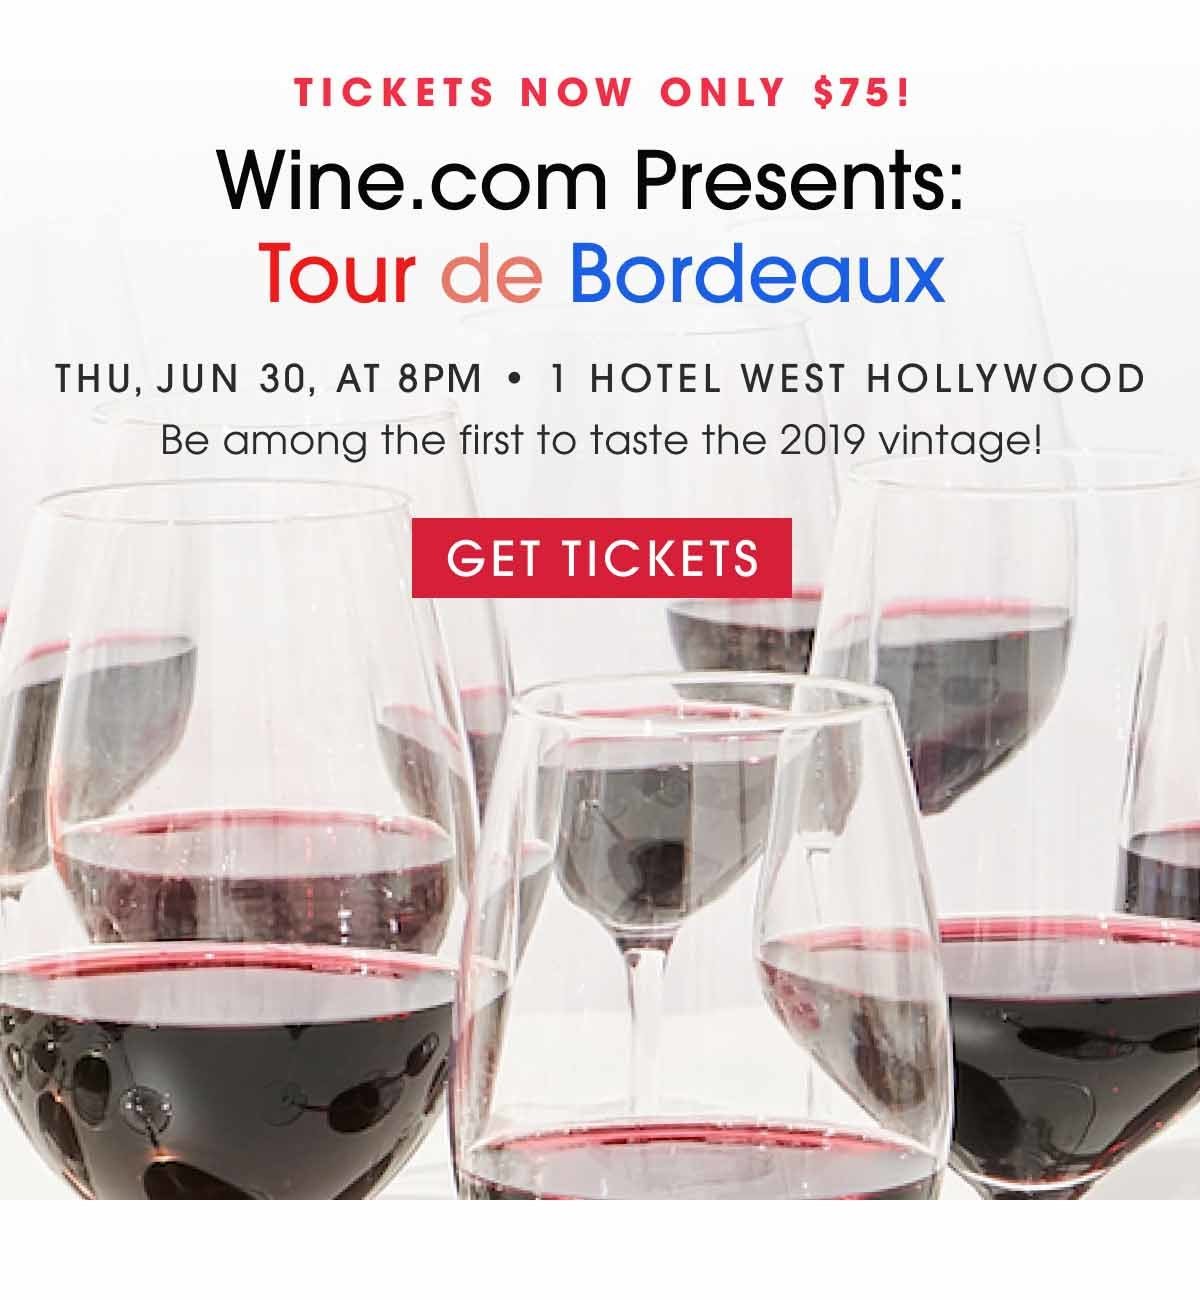 Wine.com presents Tour de Bordeaux - Be among the first to taste the 2019 vintage!